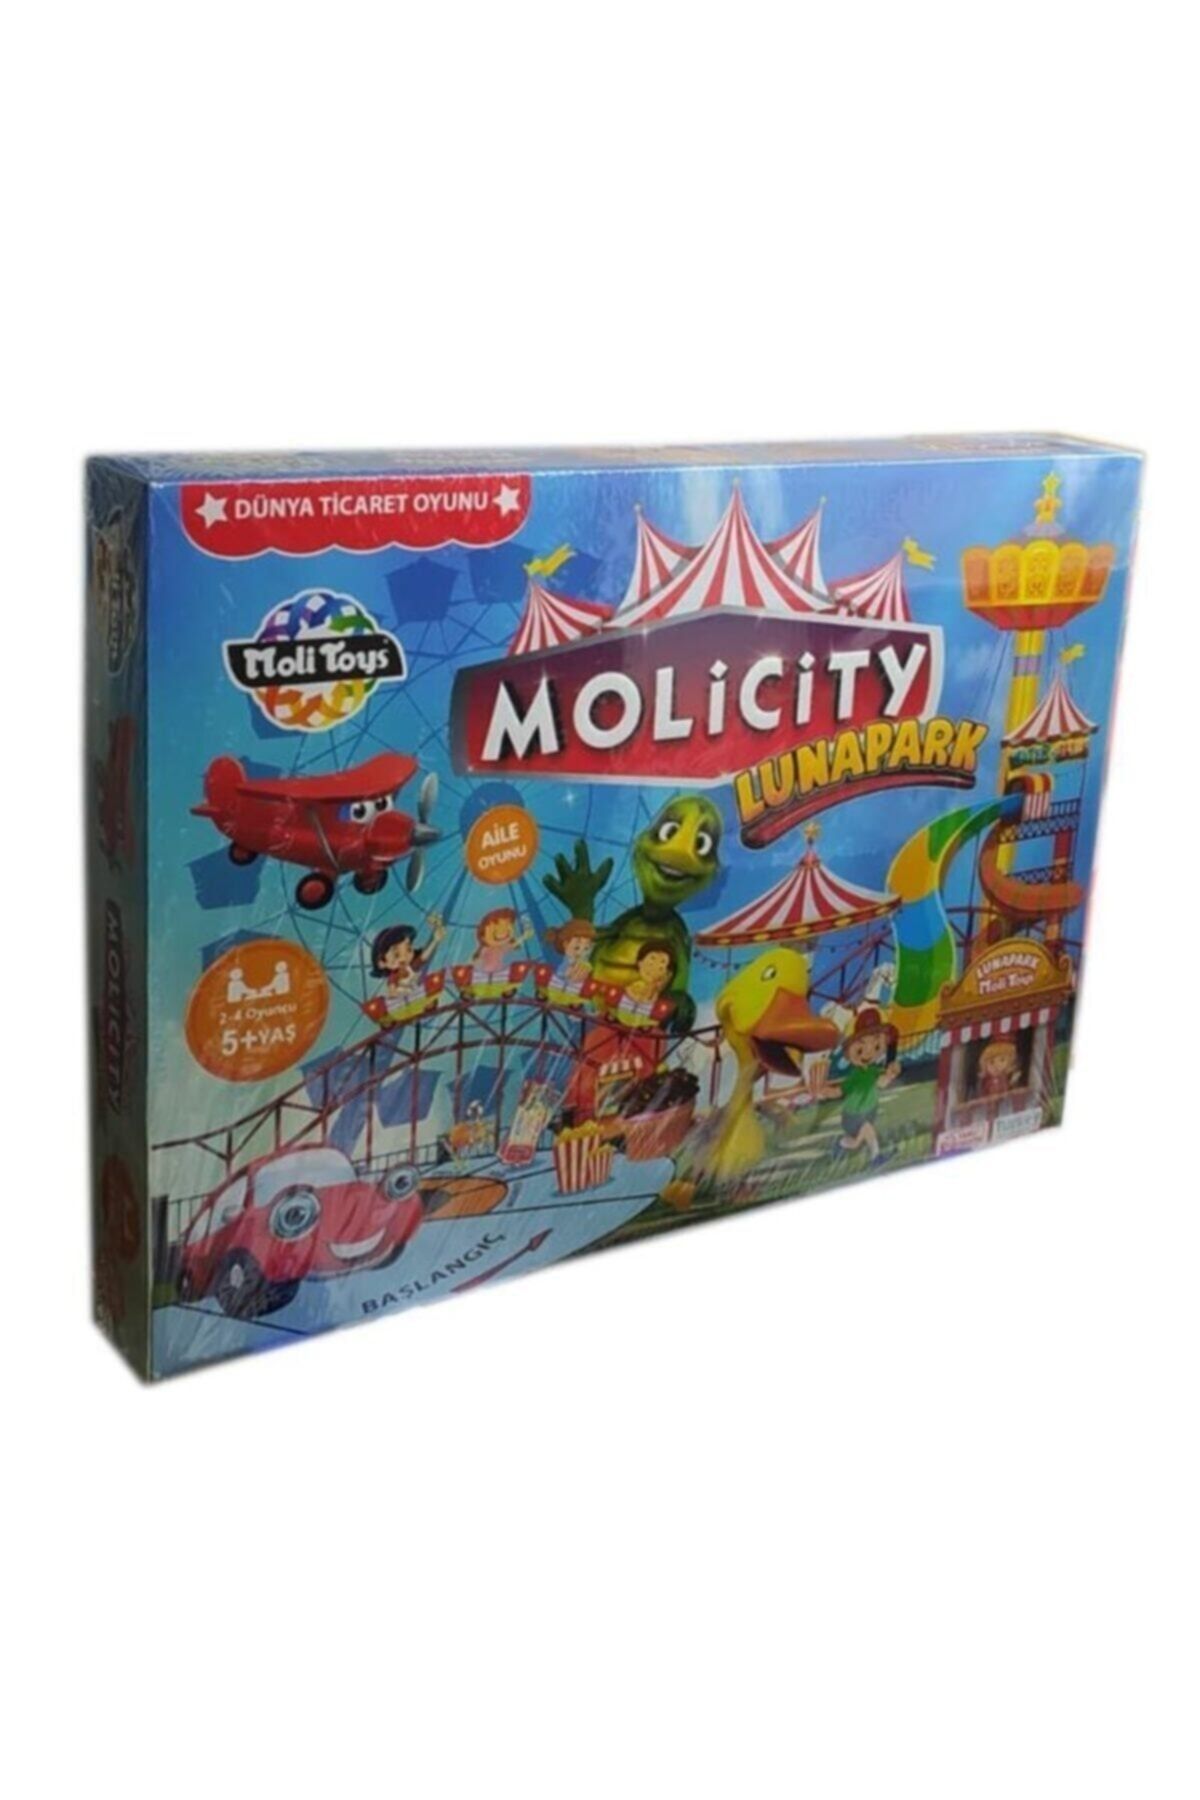 Moli Toys Molicity Lunapark